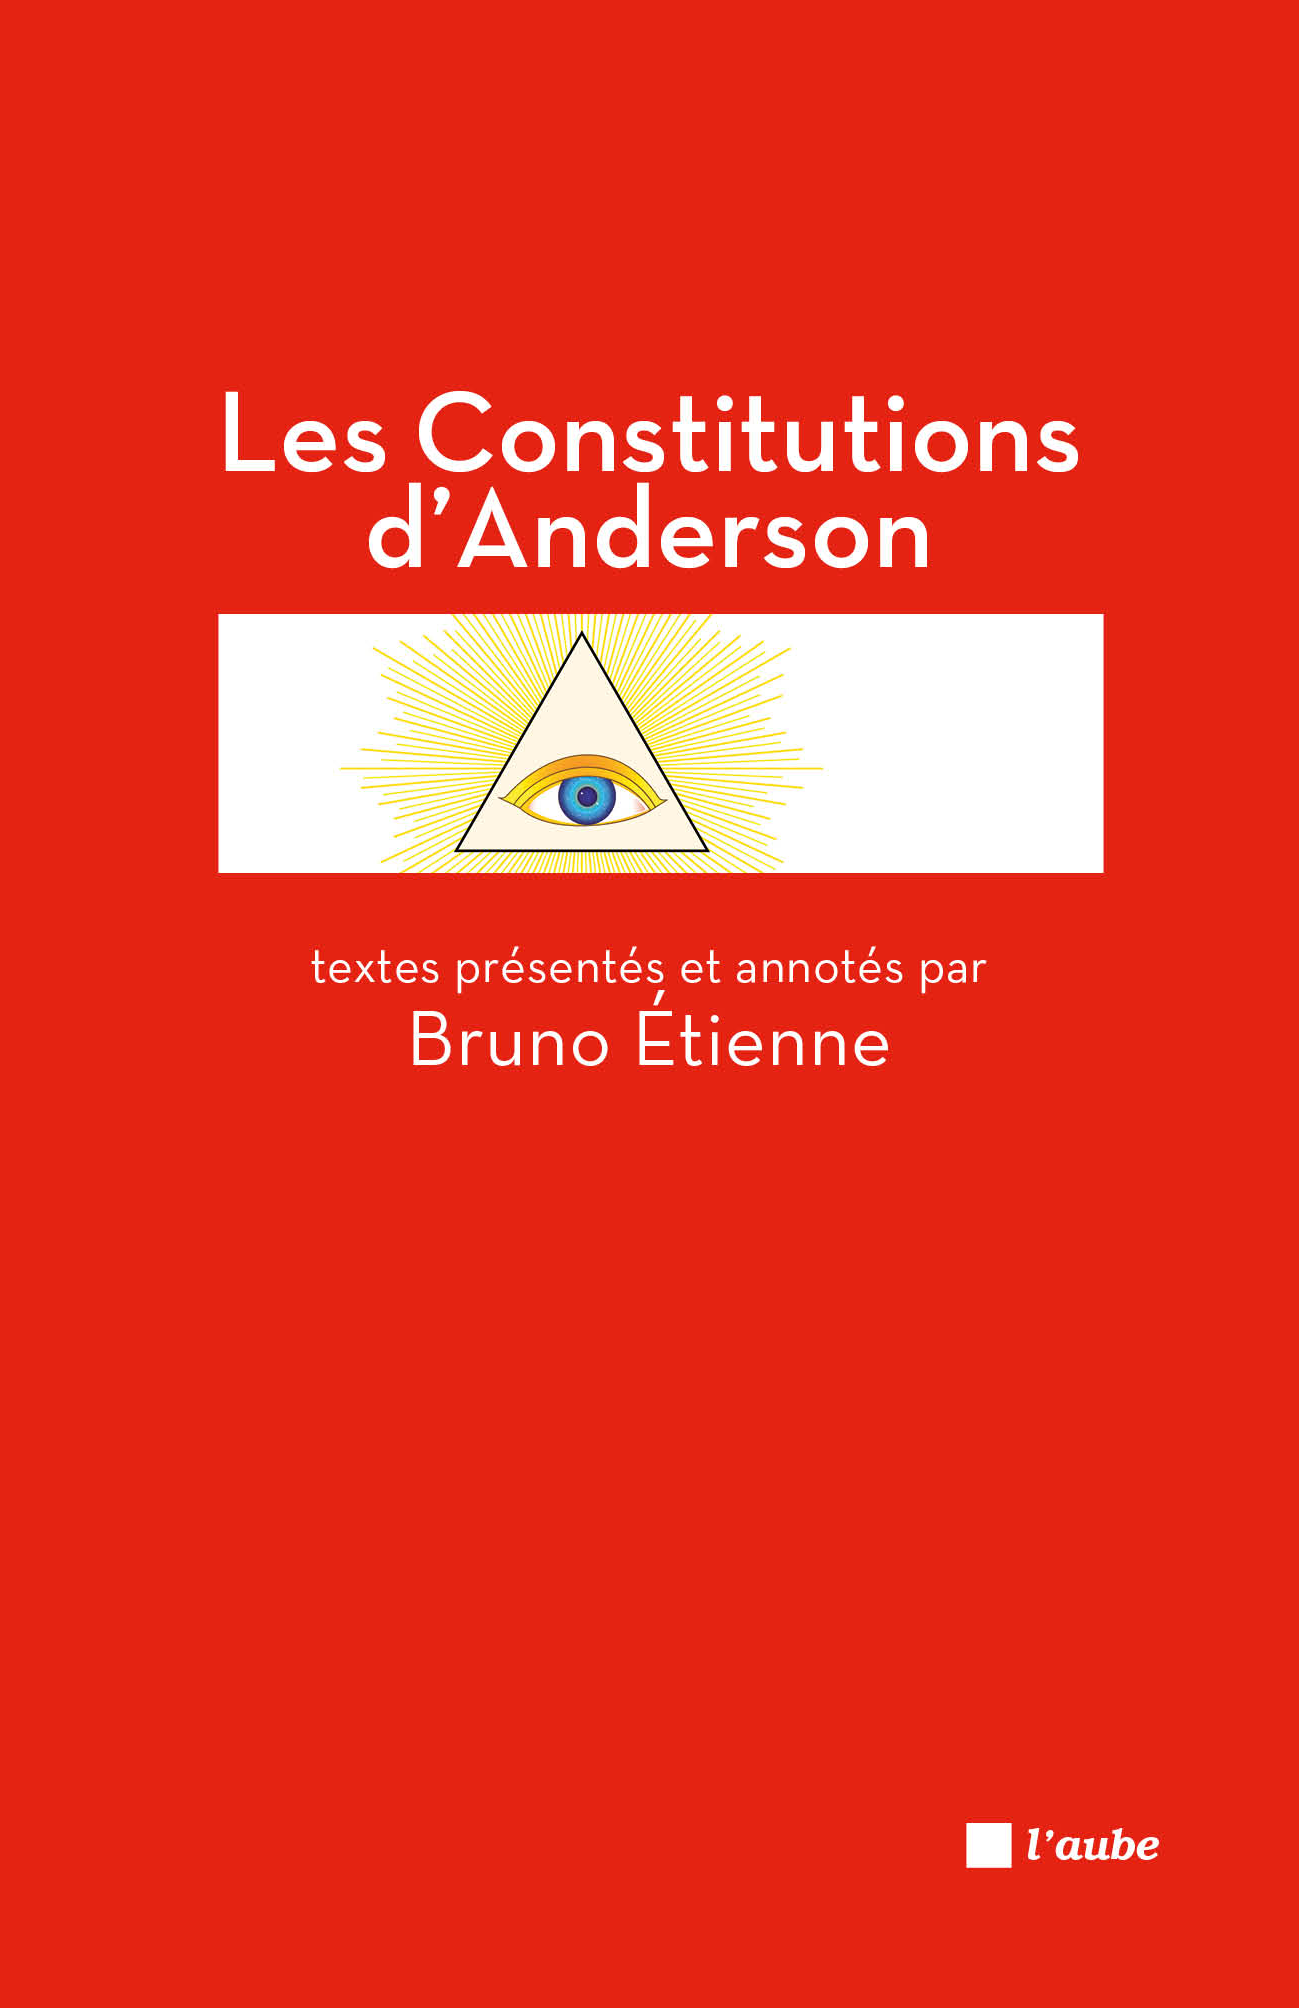 Les Constitutions d'Anderson